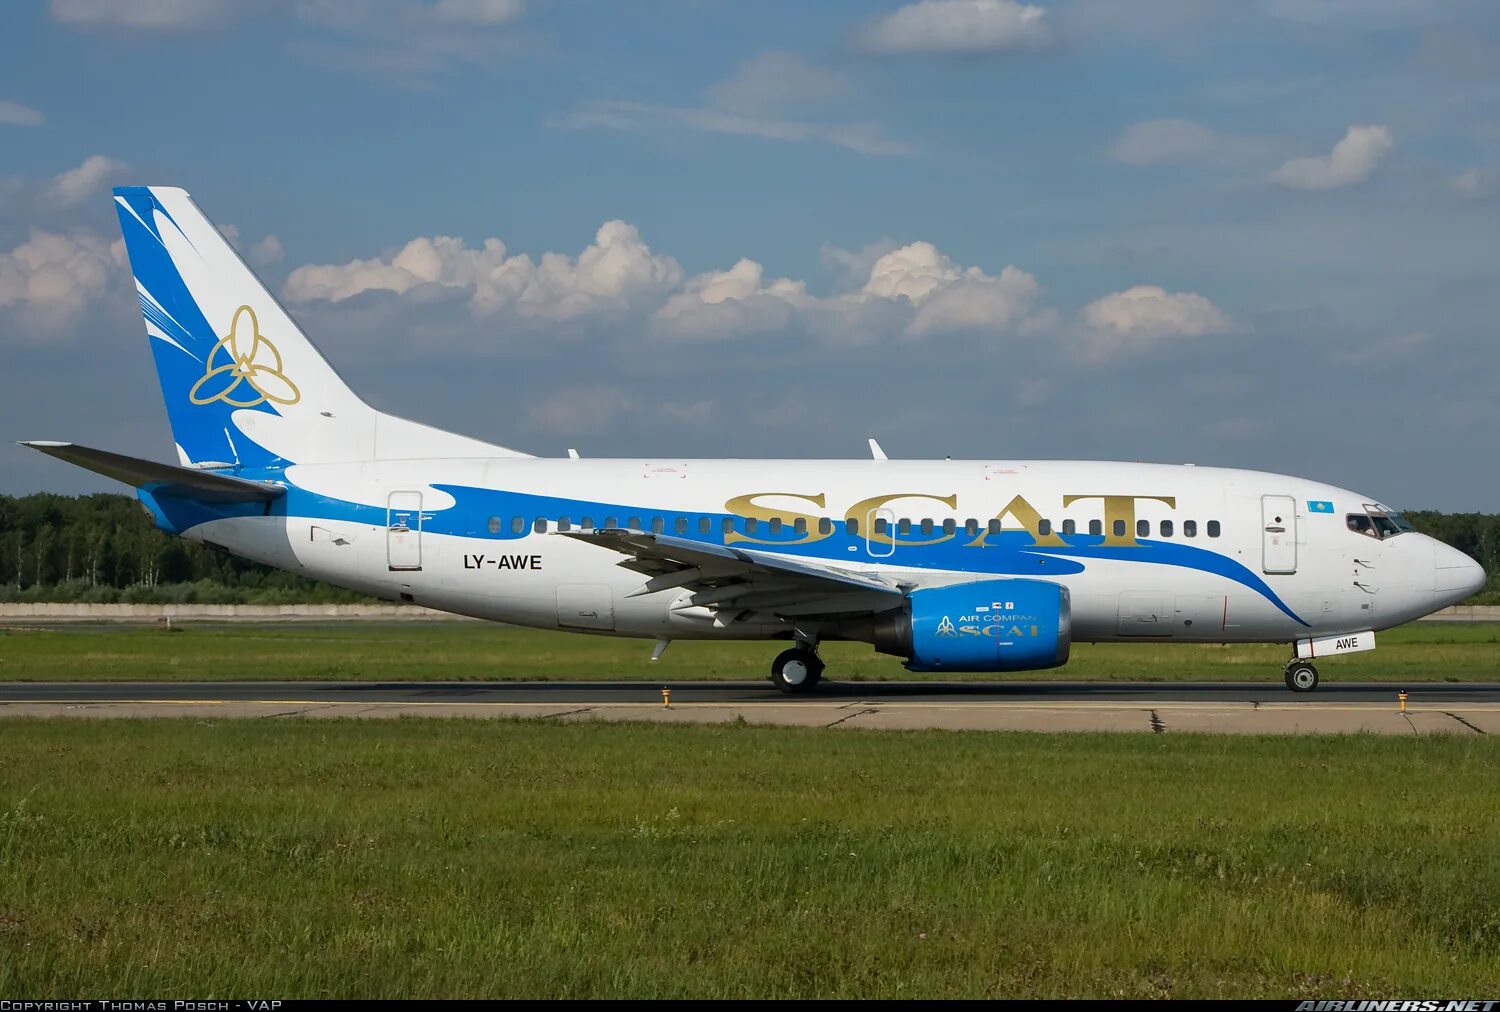 Боинг 737 Скат. Боинг 737 scat Air. Авиалинии Казахстана Скат. Авиалинии Скат Казахстан Boeing 737-300. Scat авиакомпания сайт